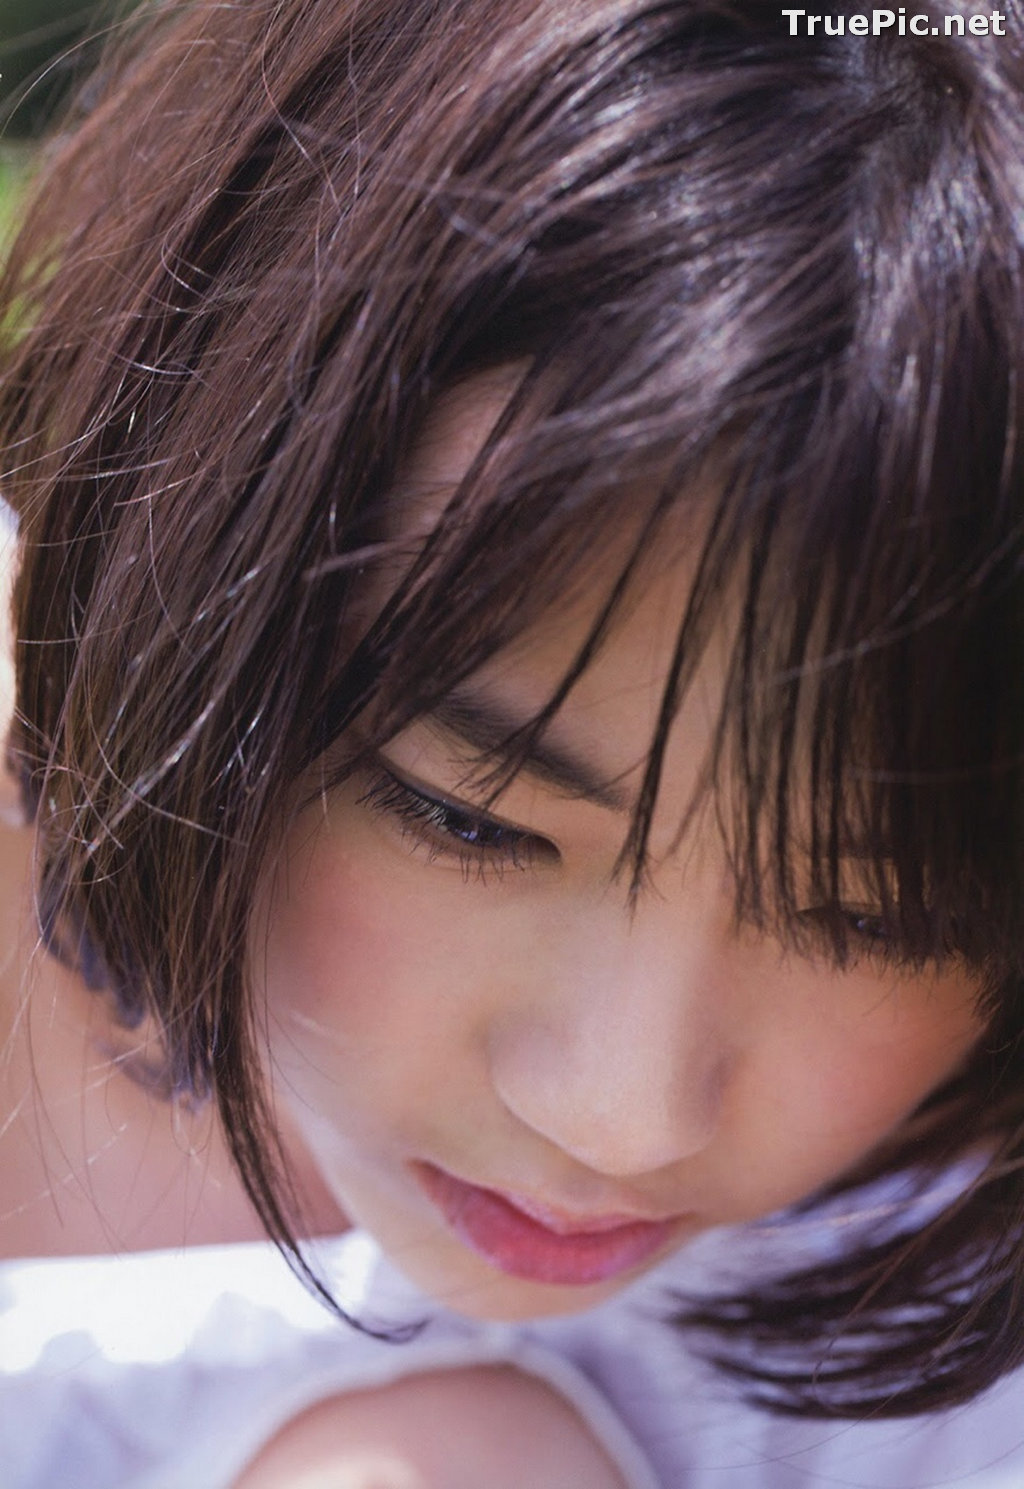 Image Japanese Singer and Actress - Sakura Miyawaki (宮脇咲良) - Sexy Picture Collection 2021 - TruePic.net - Picture-196